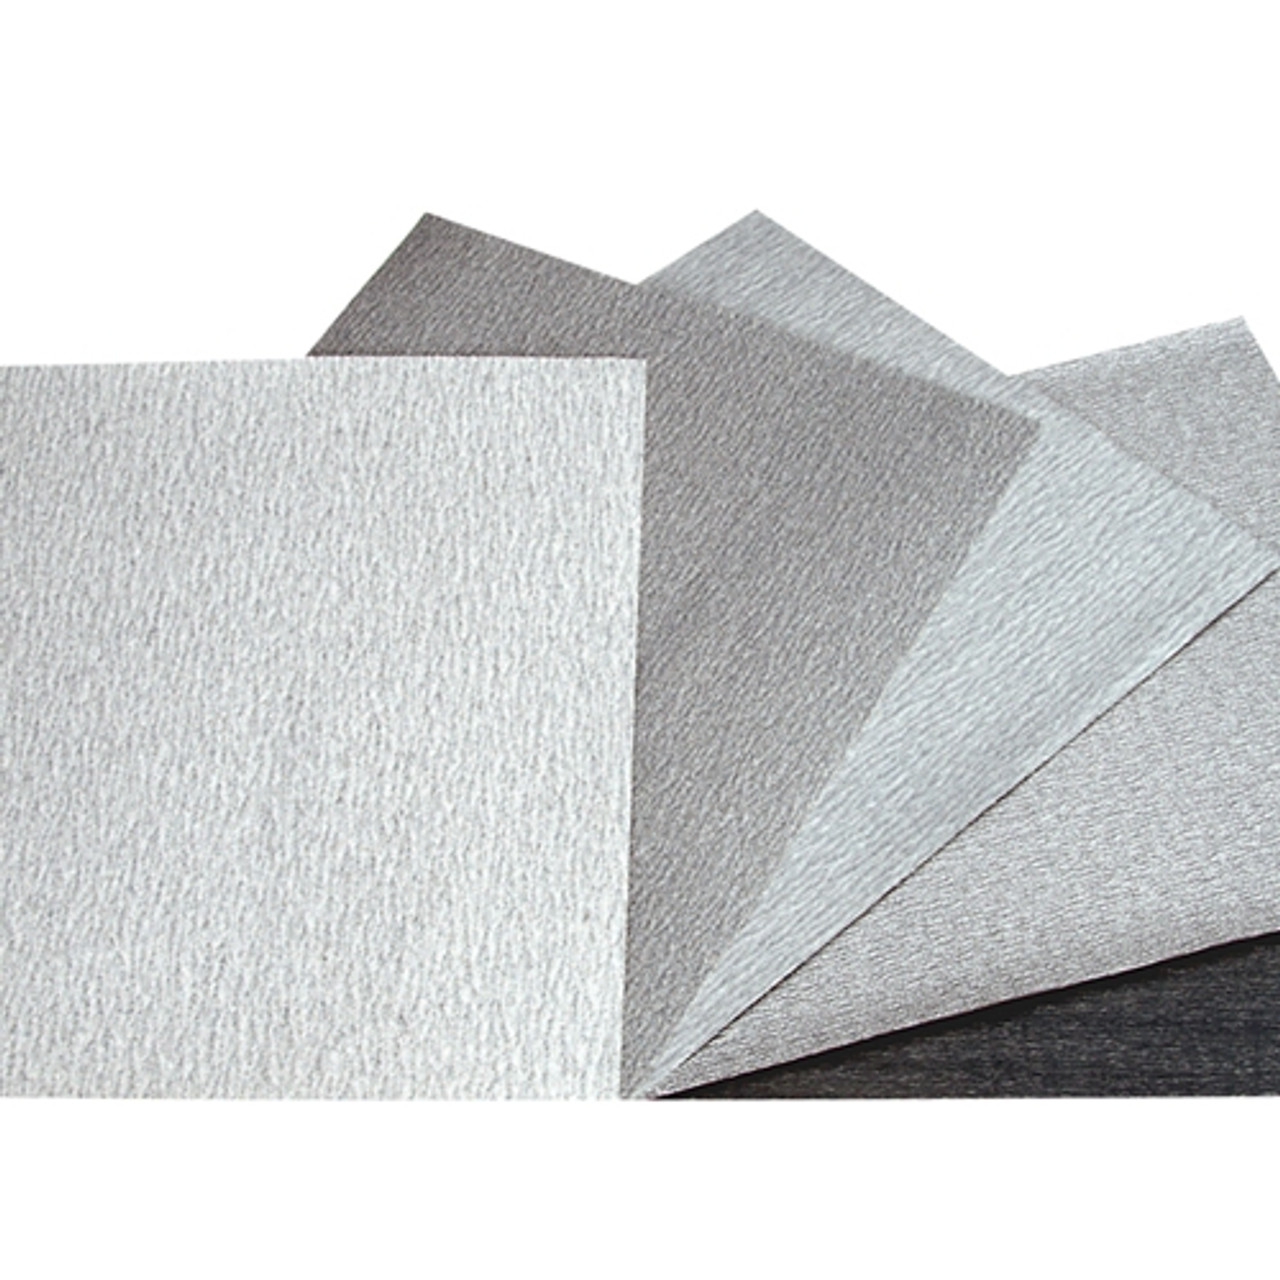 Norton®  Durite Abrasive Paper - 320 Grit  (Pkg. of 5)